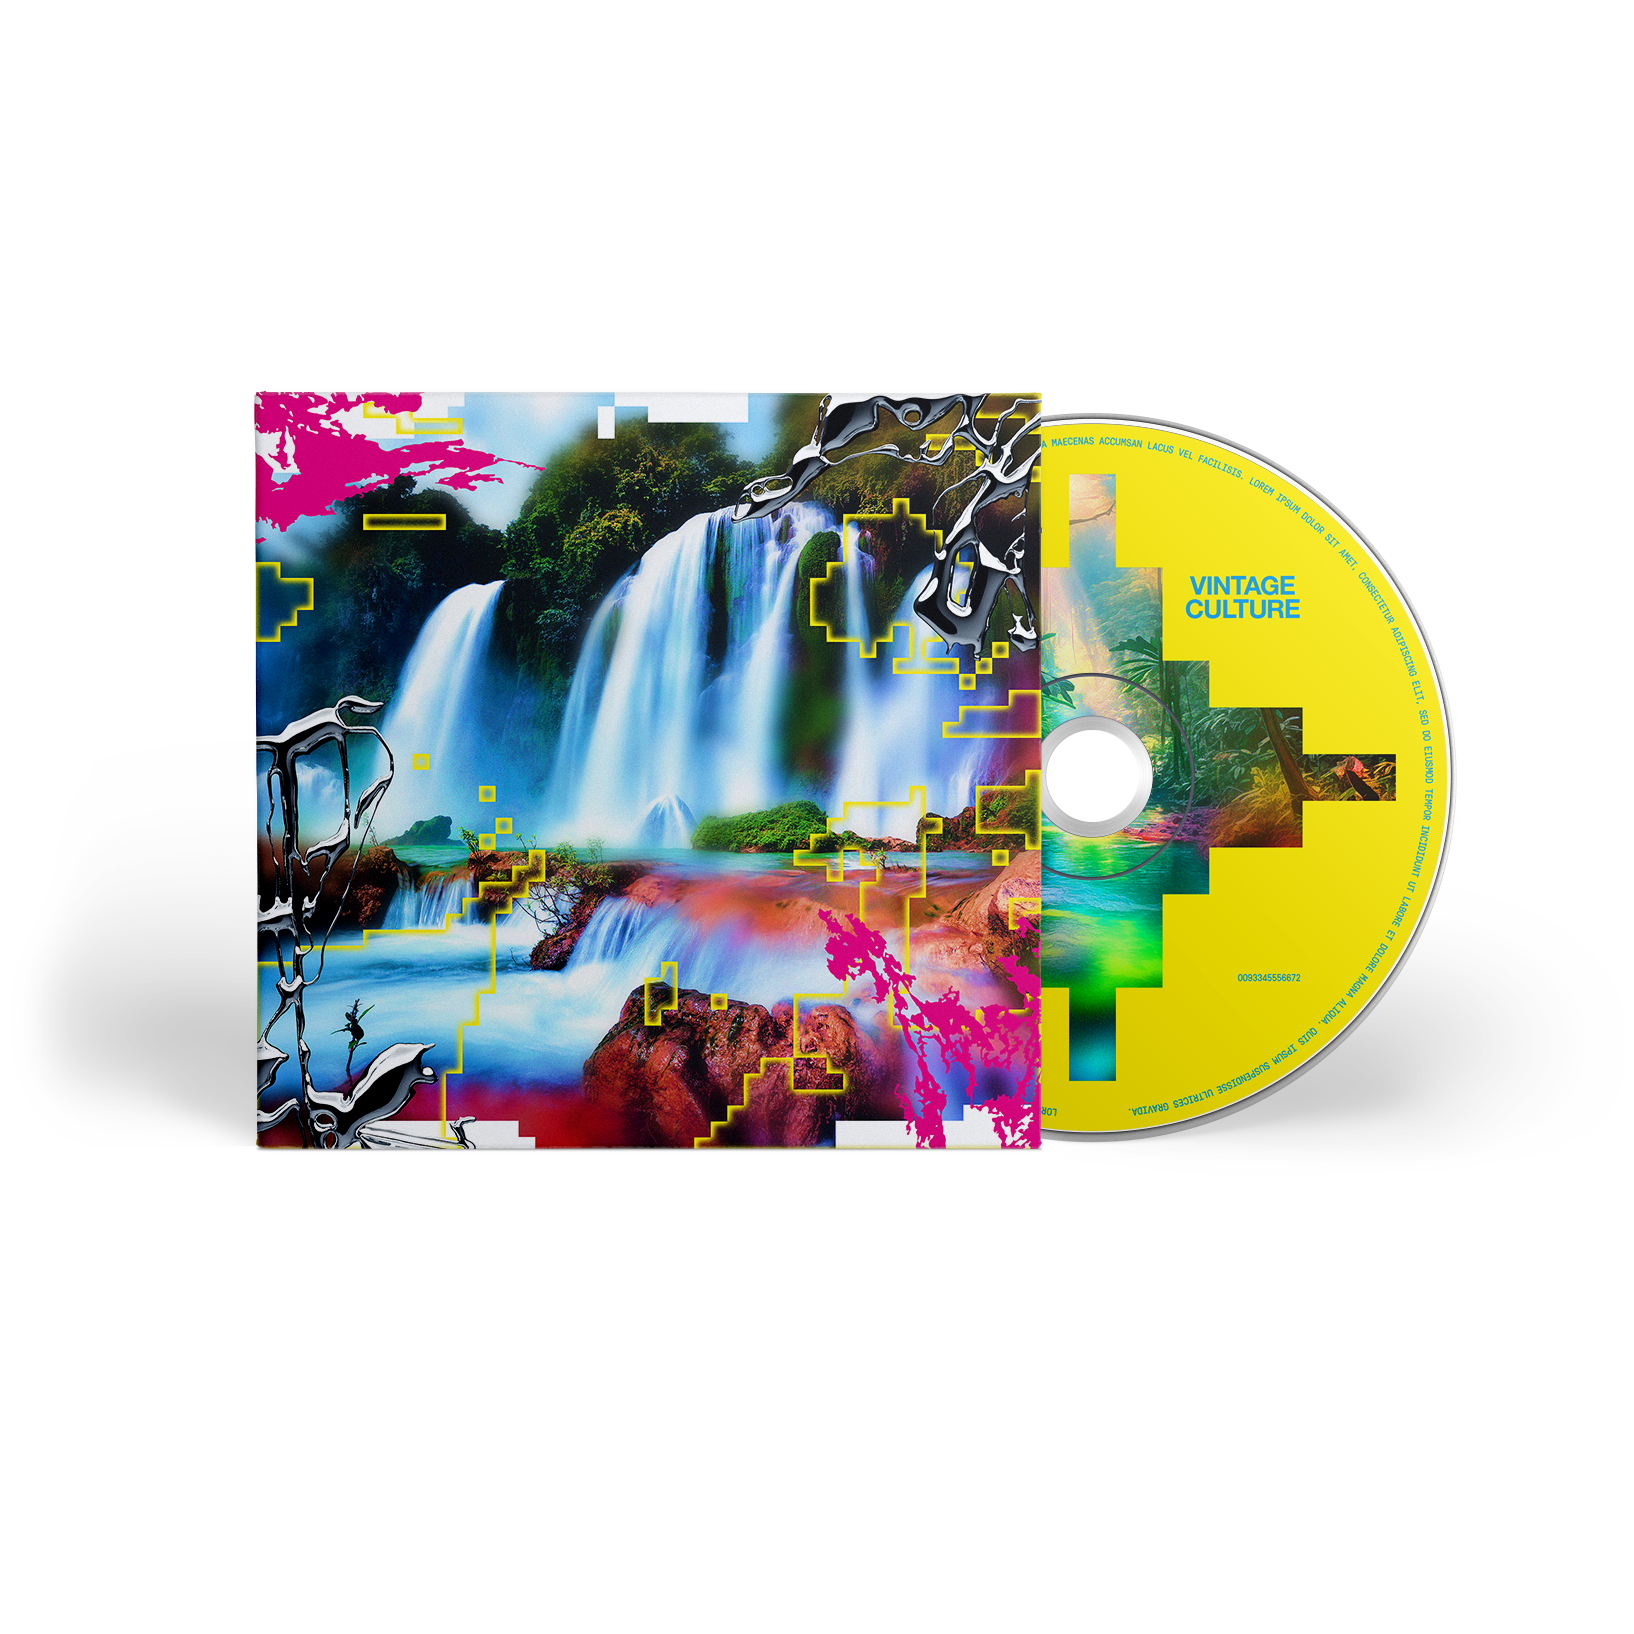 Promised Land Store Exclusive 2LP & CD Bundle